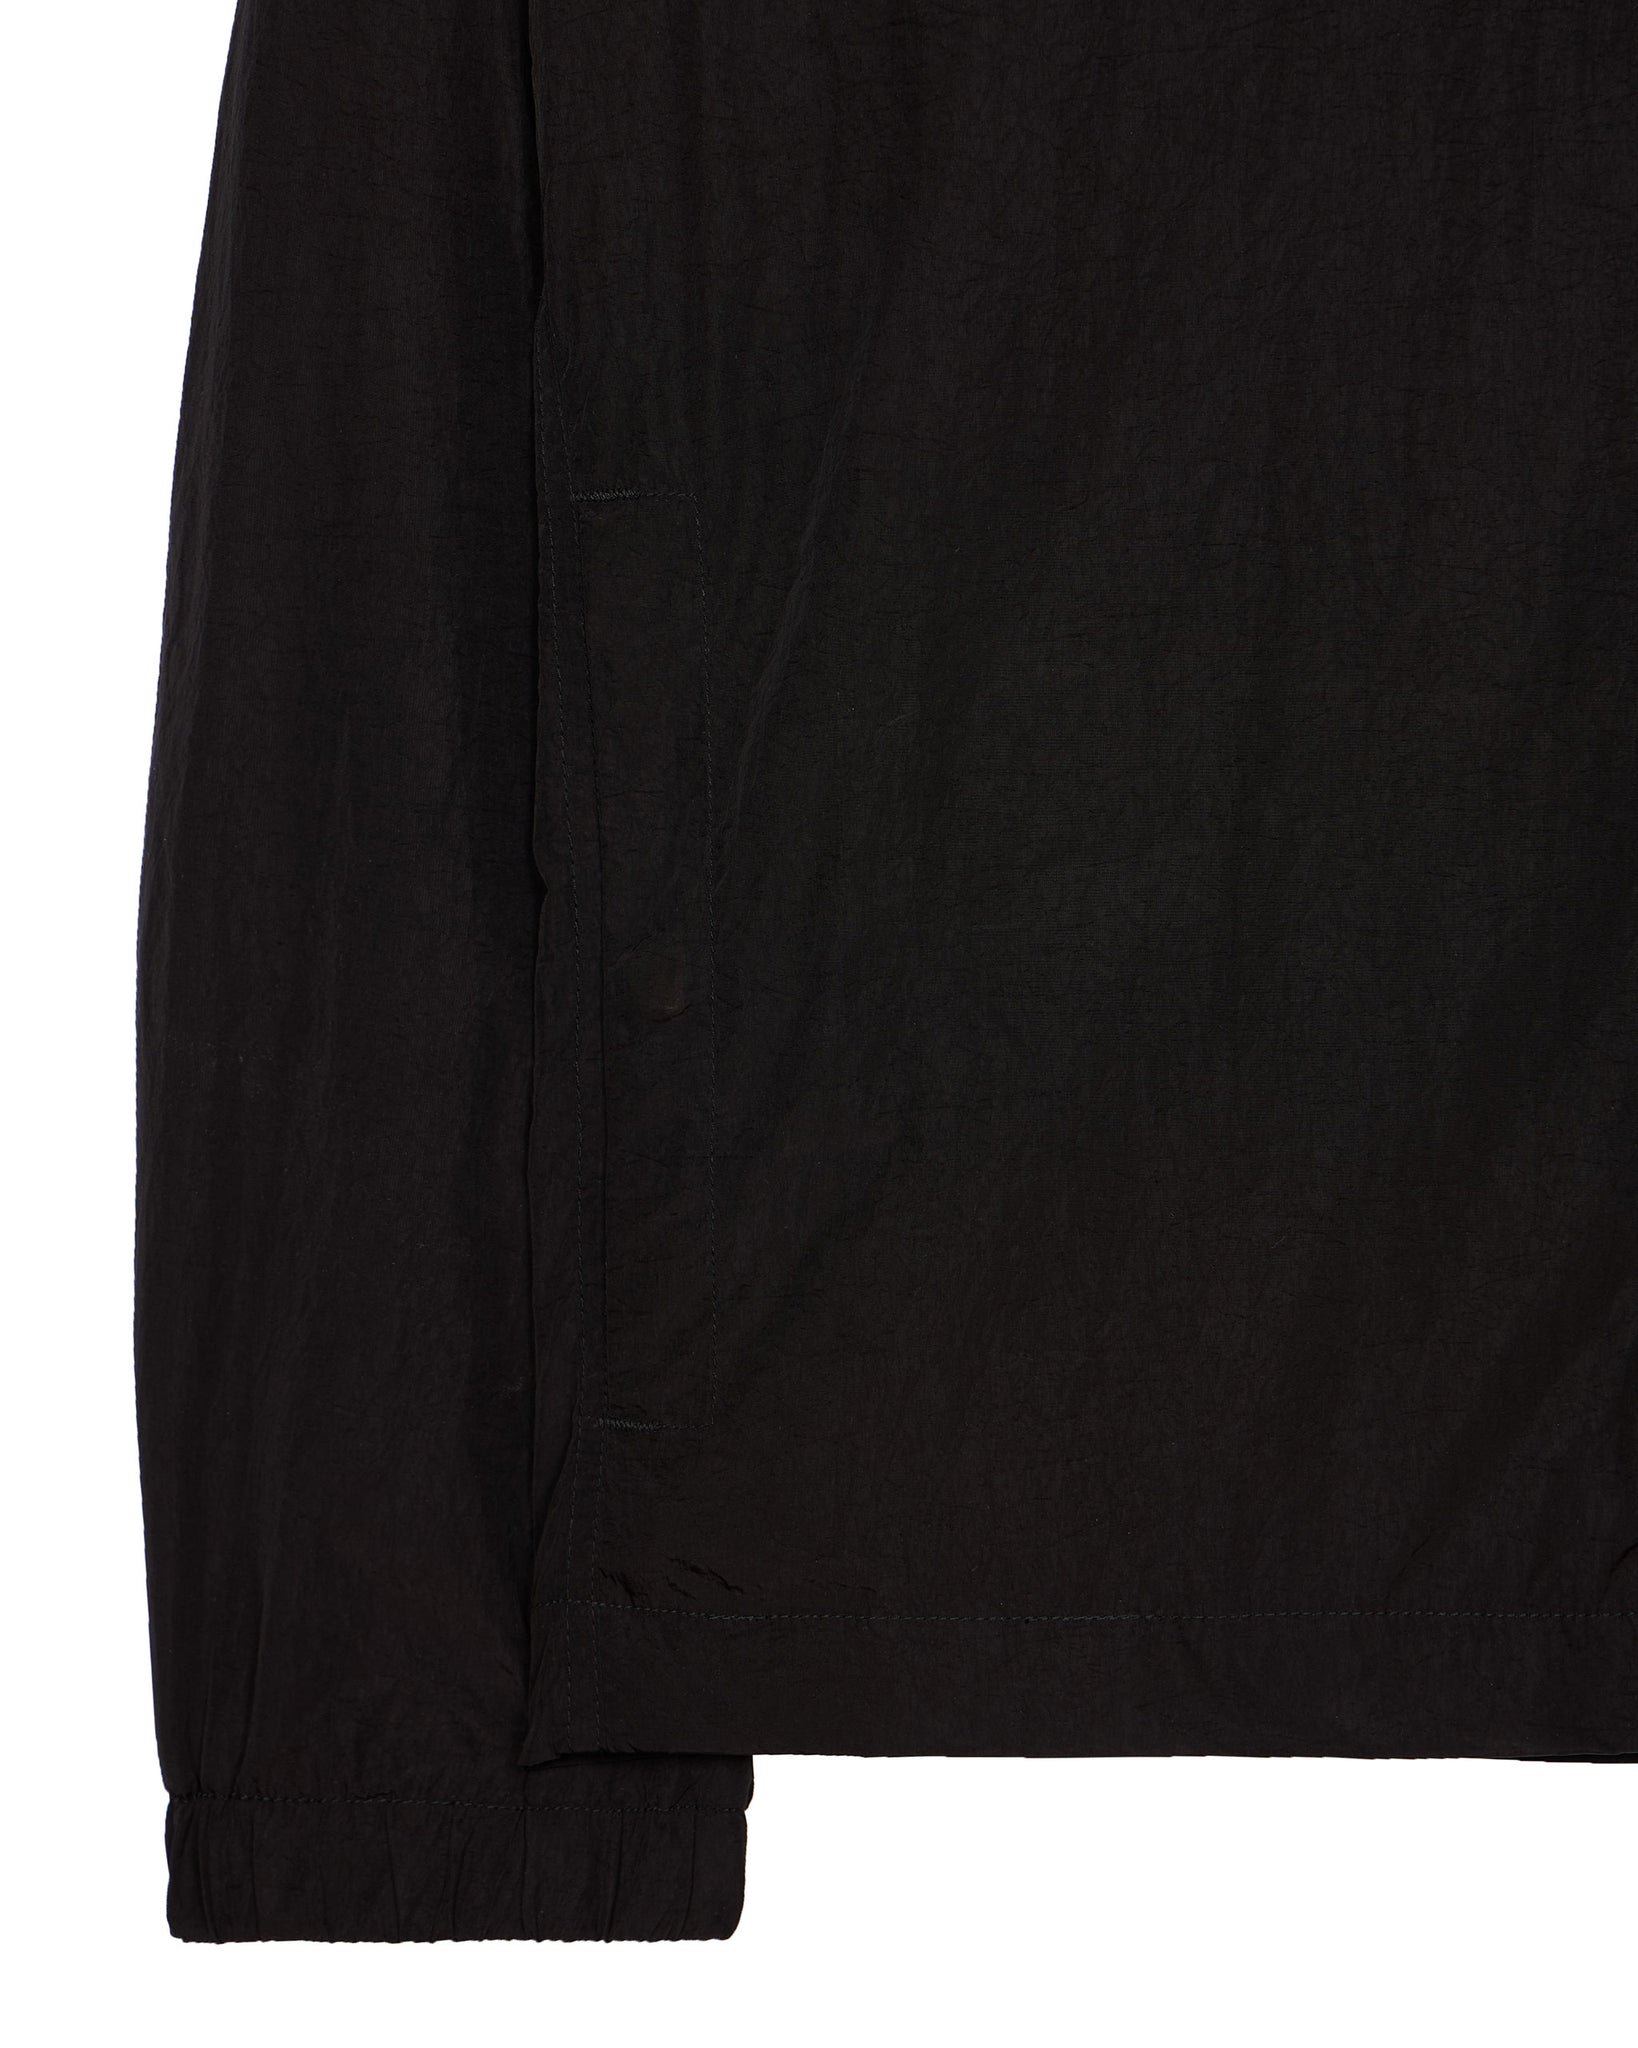 Porter Over-Shirt Black - Plus Size